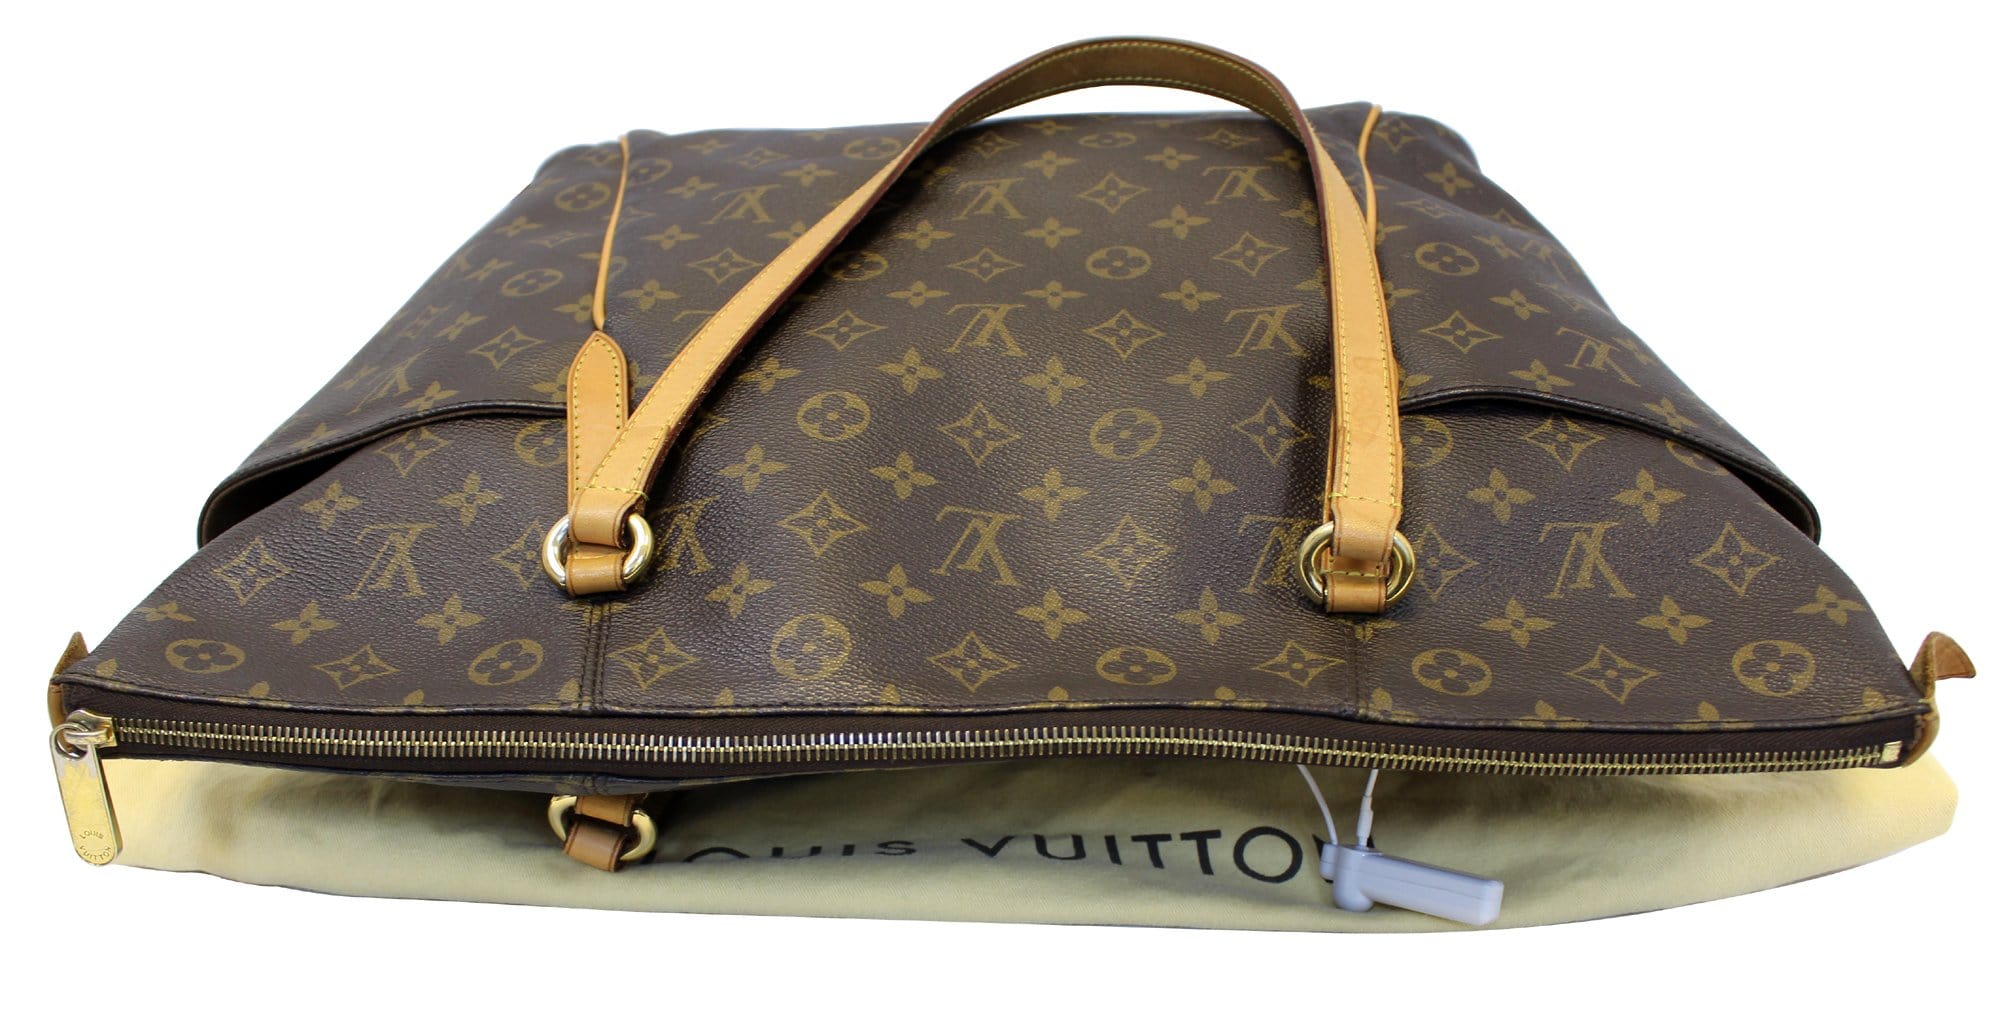 Louis Vuitton Totally GM Monogram Canvas Tote Shoulder Bag